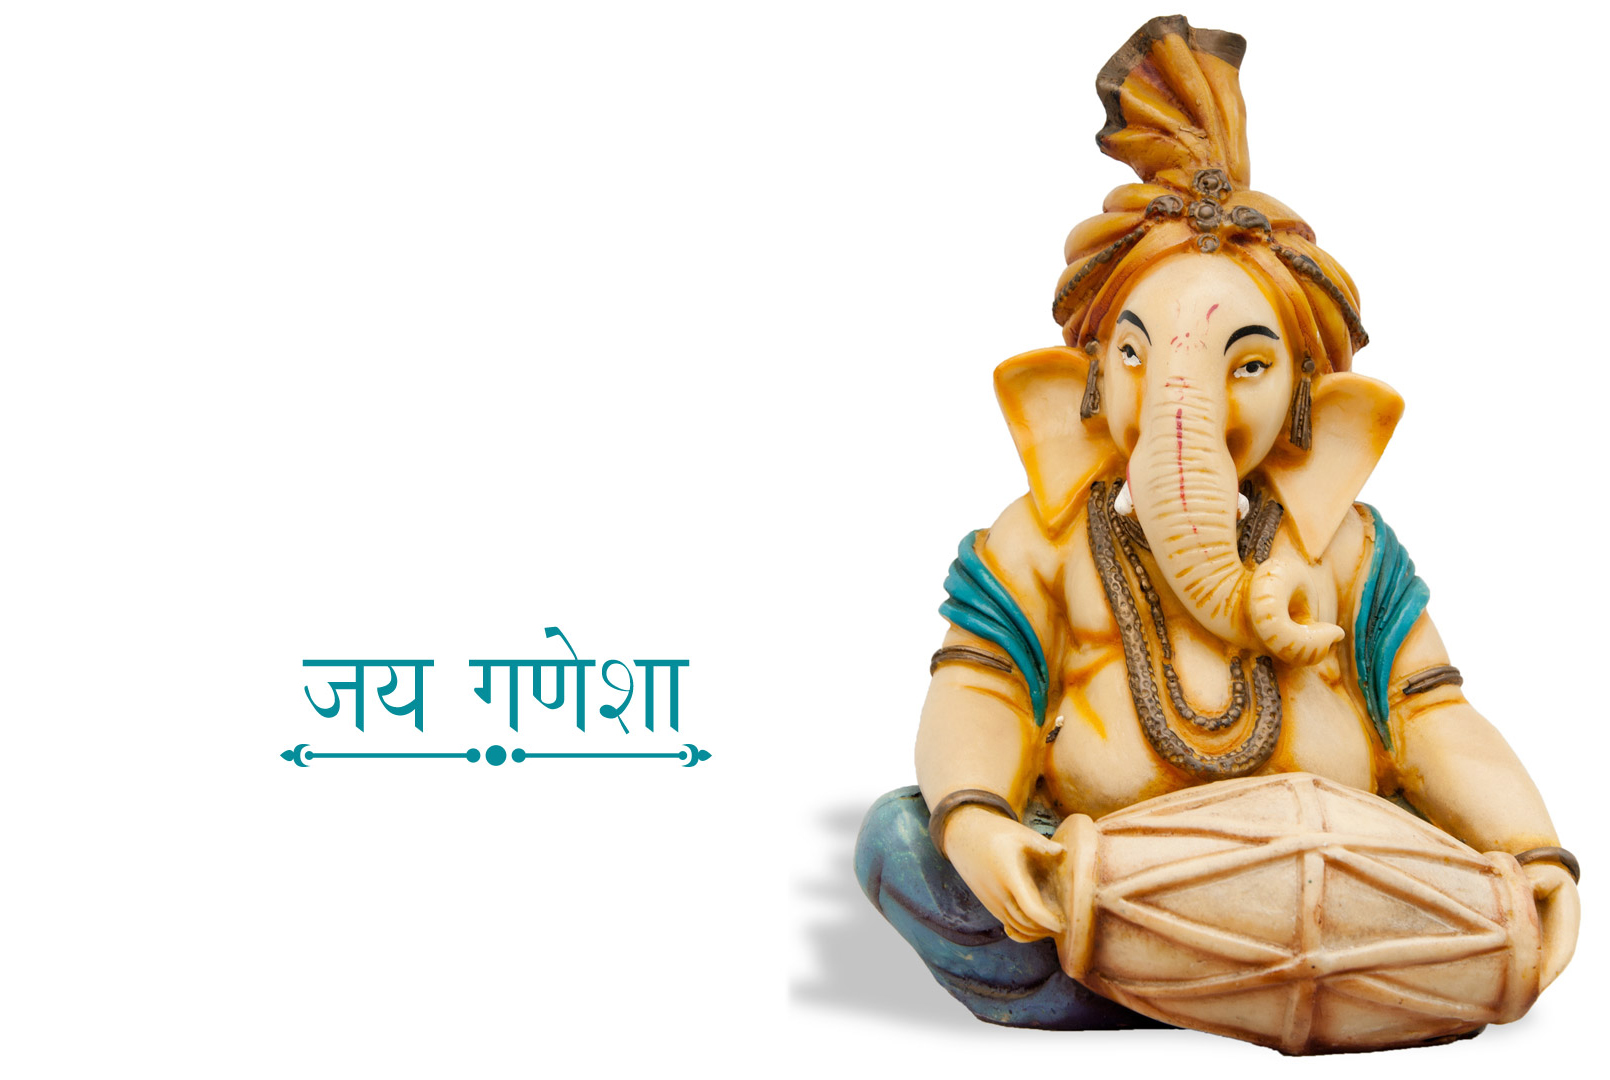 Lord Ganesha Ganpati Full hd wallpapers Images Download Free ...